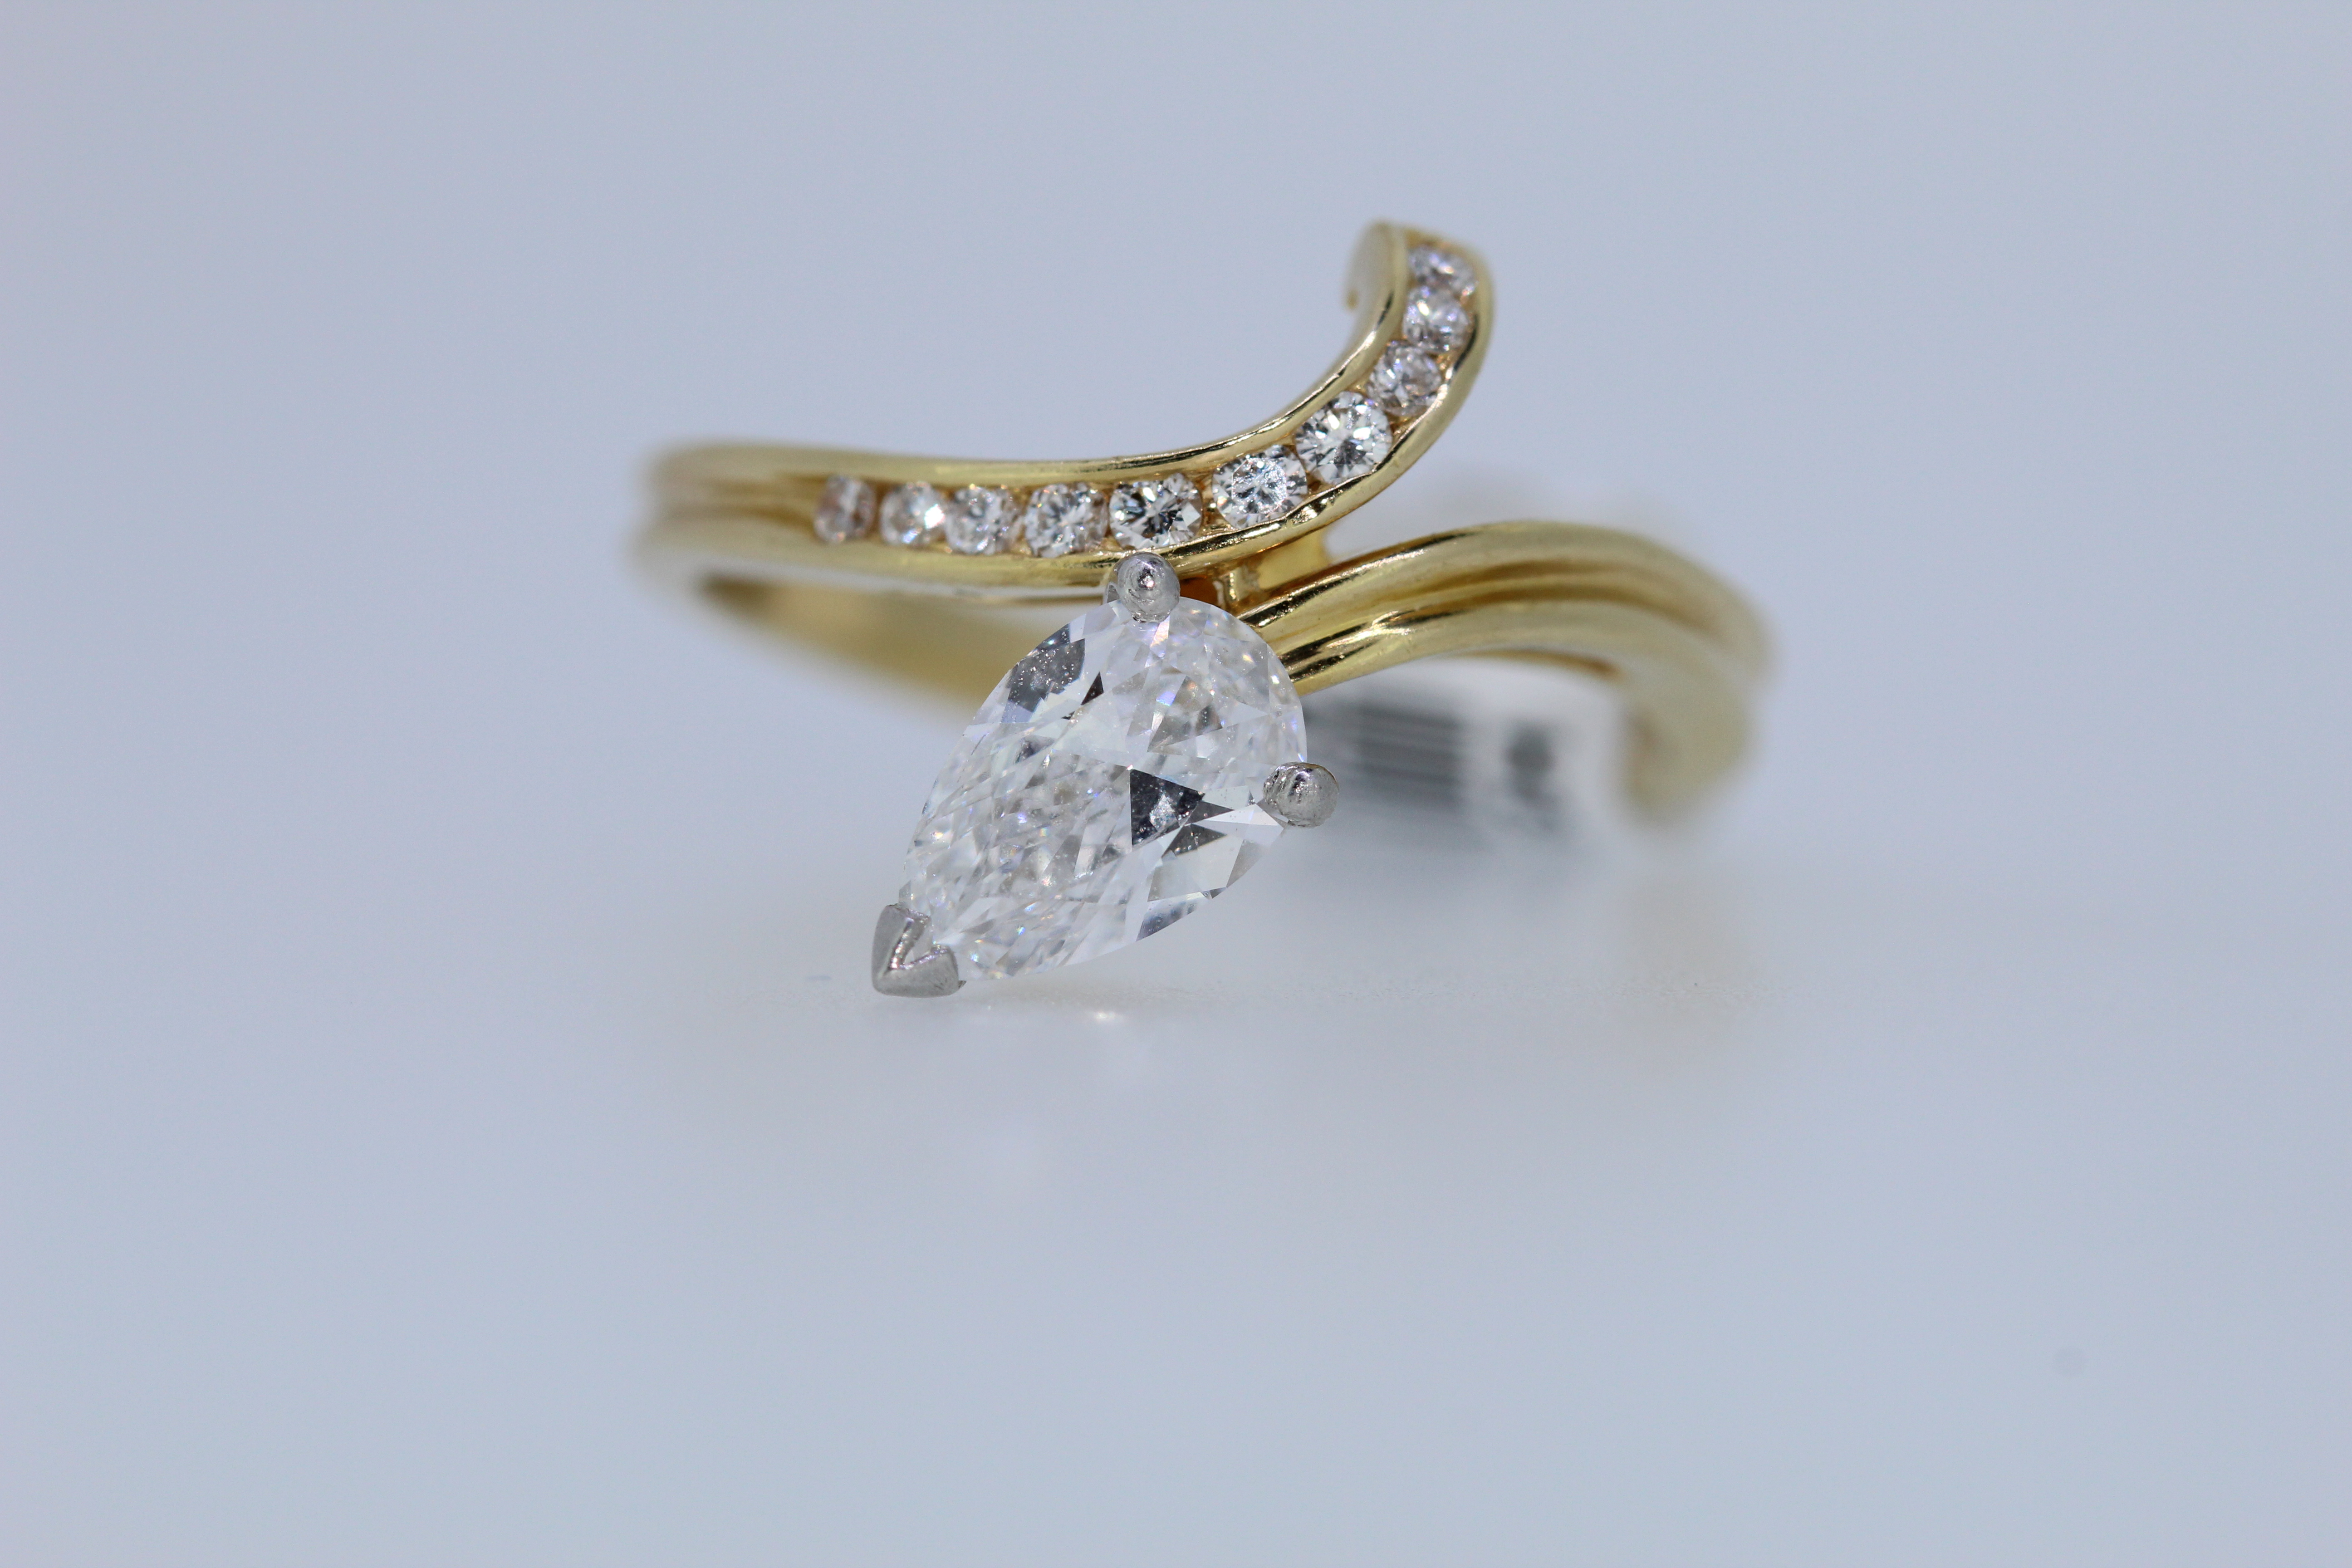 18ct Yellow Gold Pear Cut Diamond Ring - Image 5 of 5